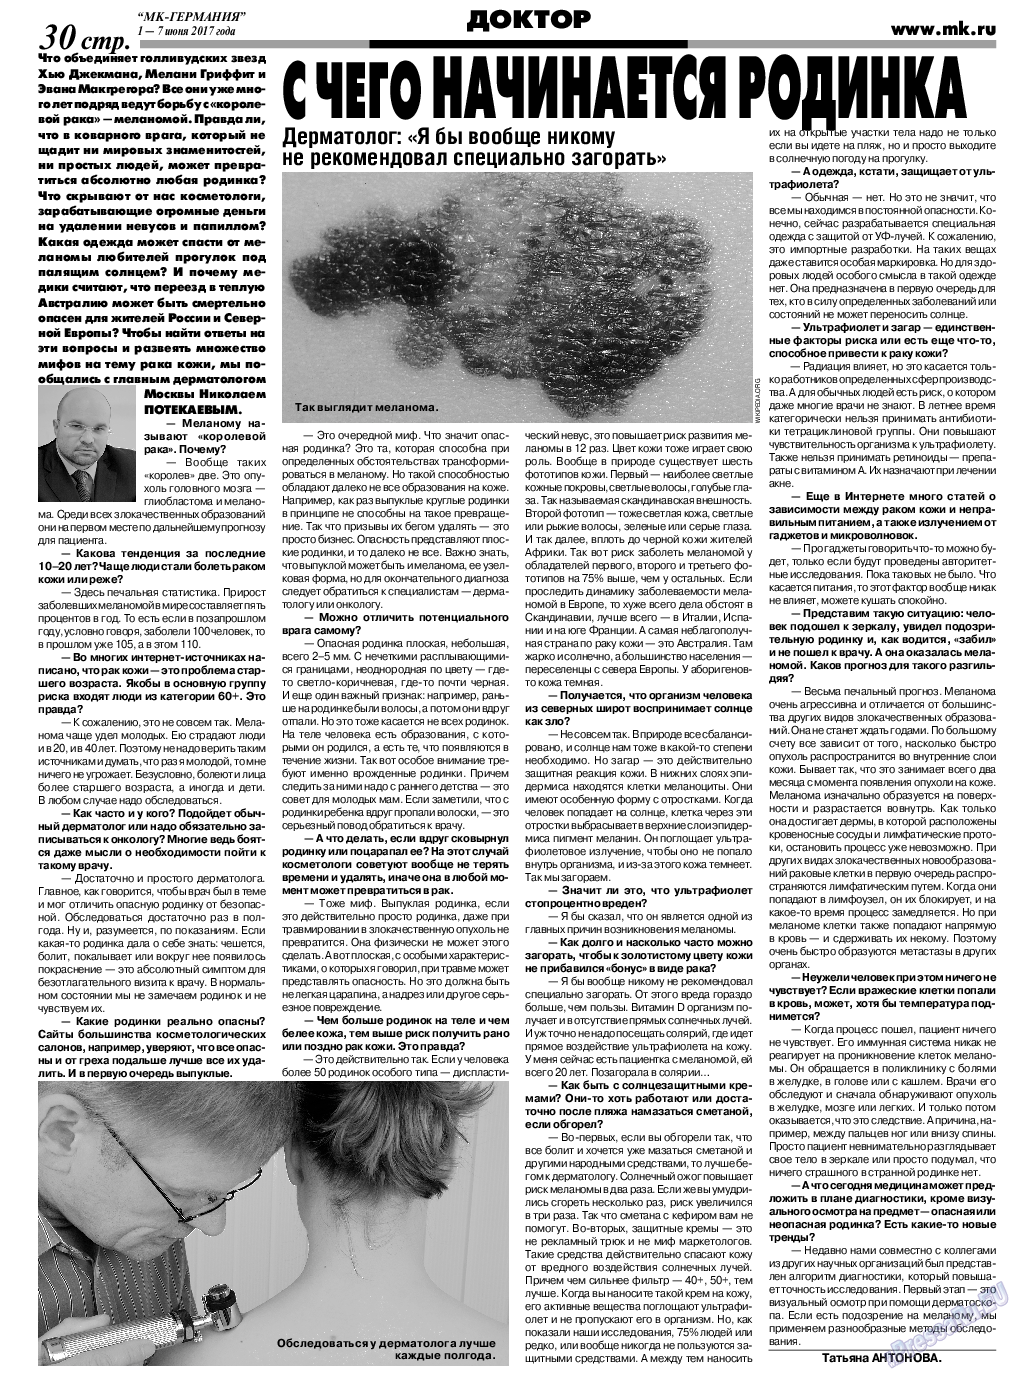 МК-Германия, газета. 2017 №23 стр.30